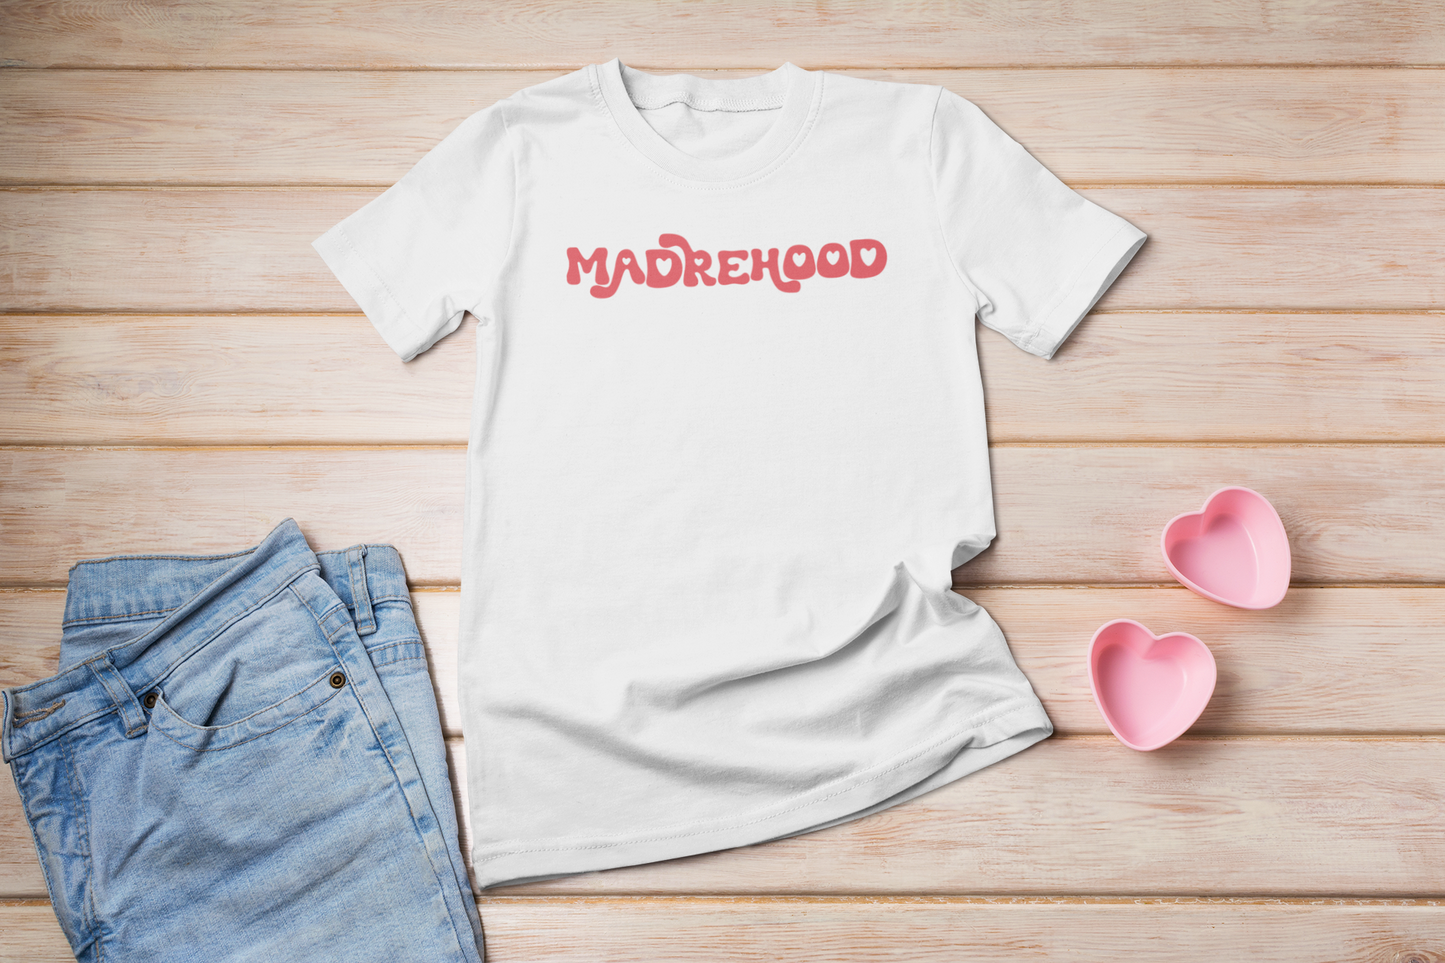 Madrehood Con Amor Jersey Short-Sleeve T-Shirt